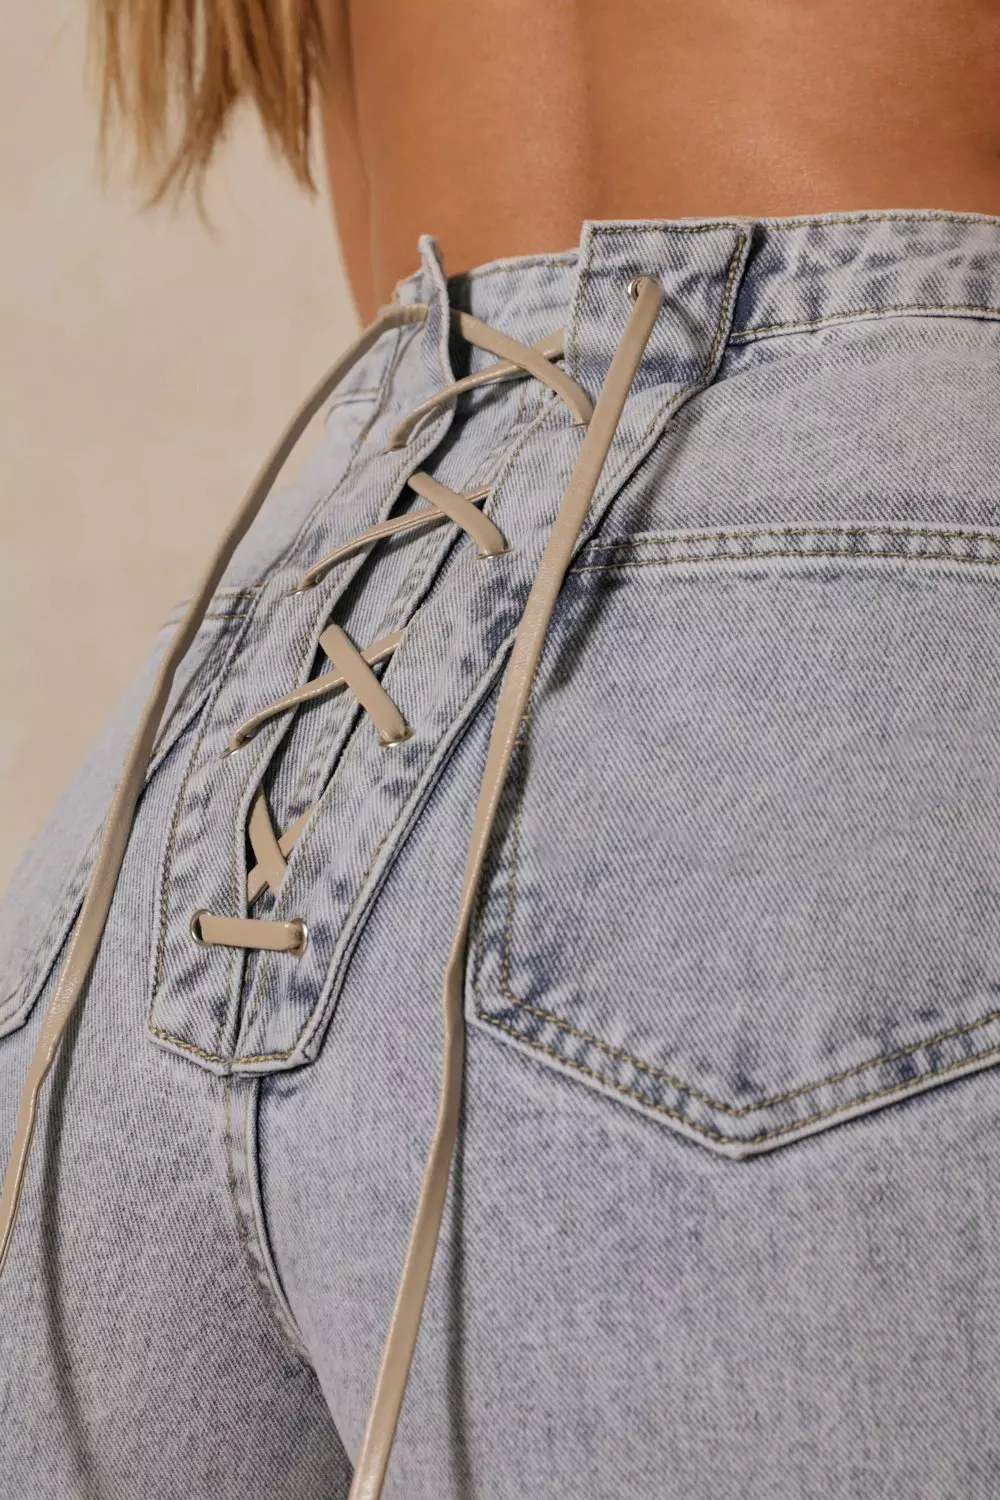 Mount Bank filthy Invitere Lace Up Back Detail Jeans | Misspap UK